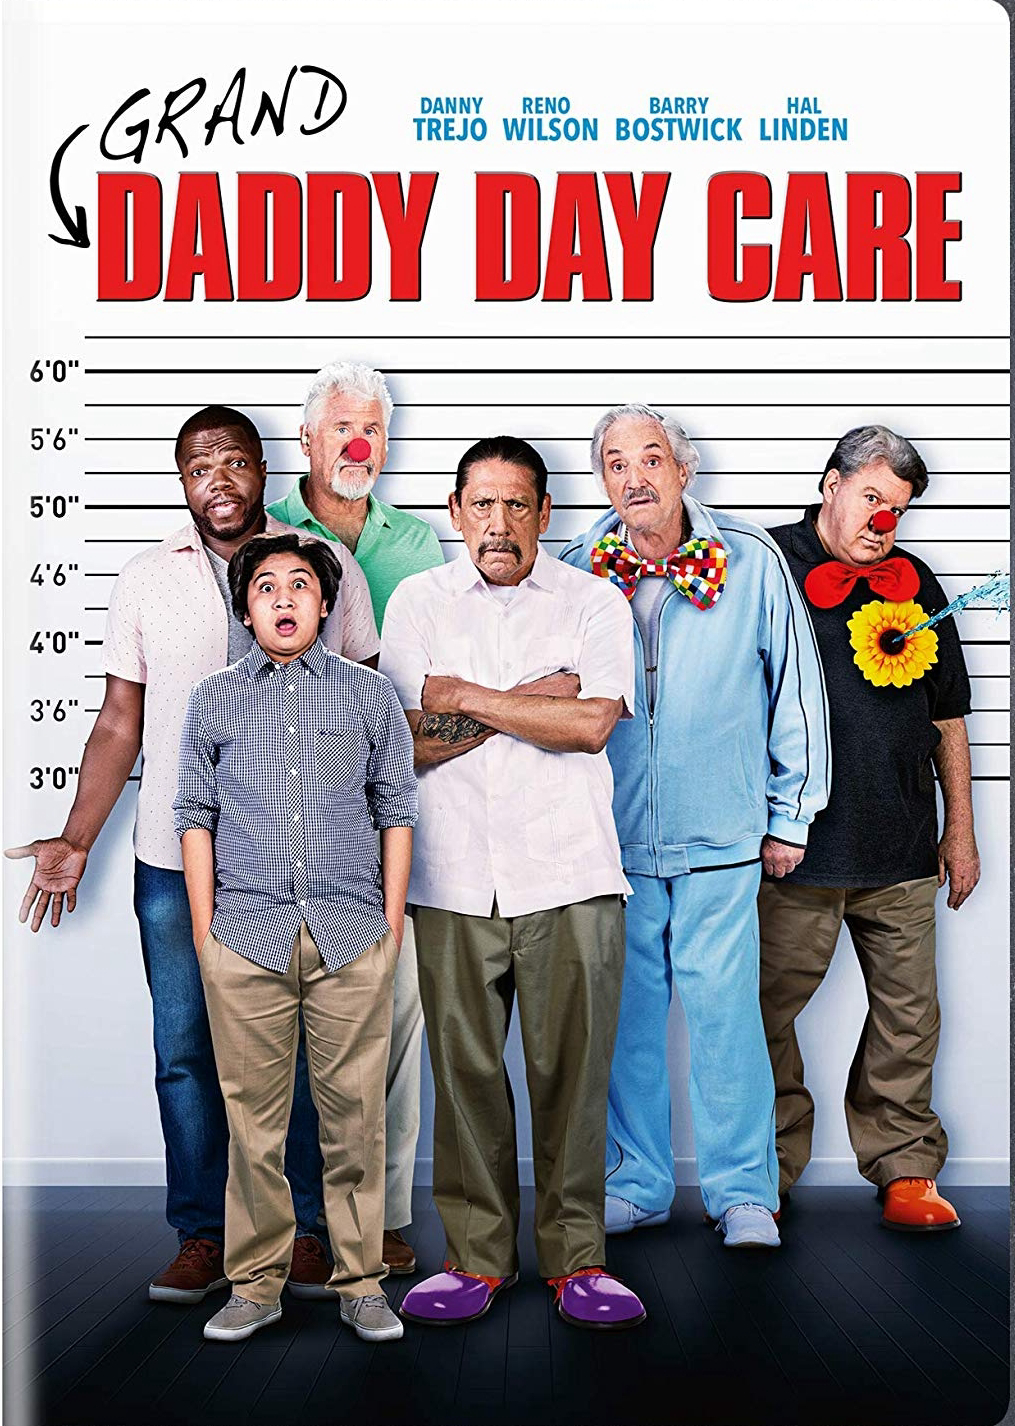 Bố mở nhà trẻ - Daddy Day Care